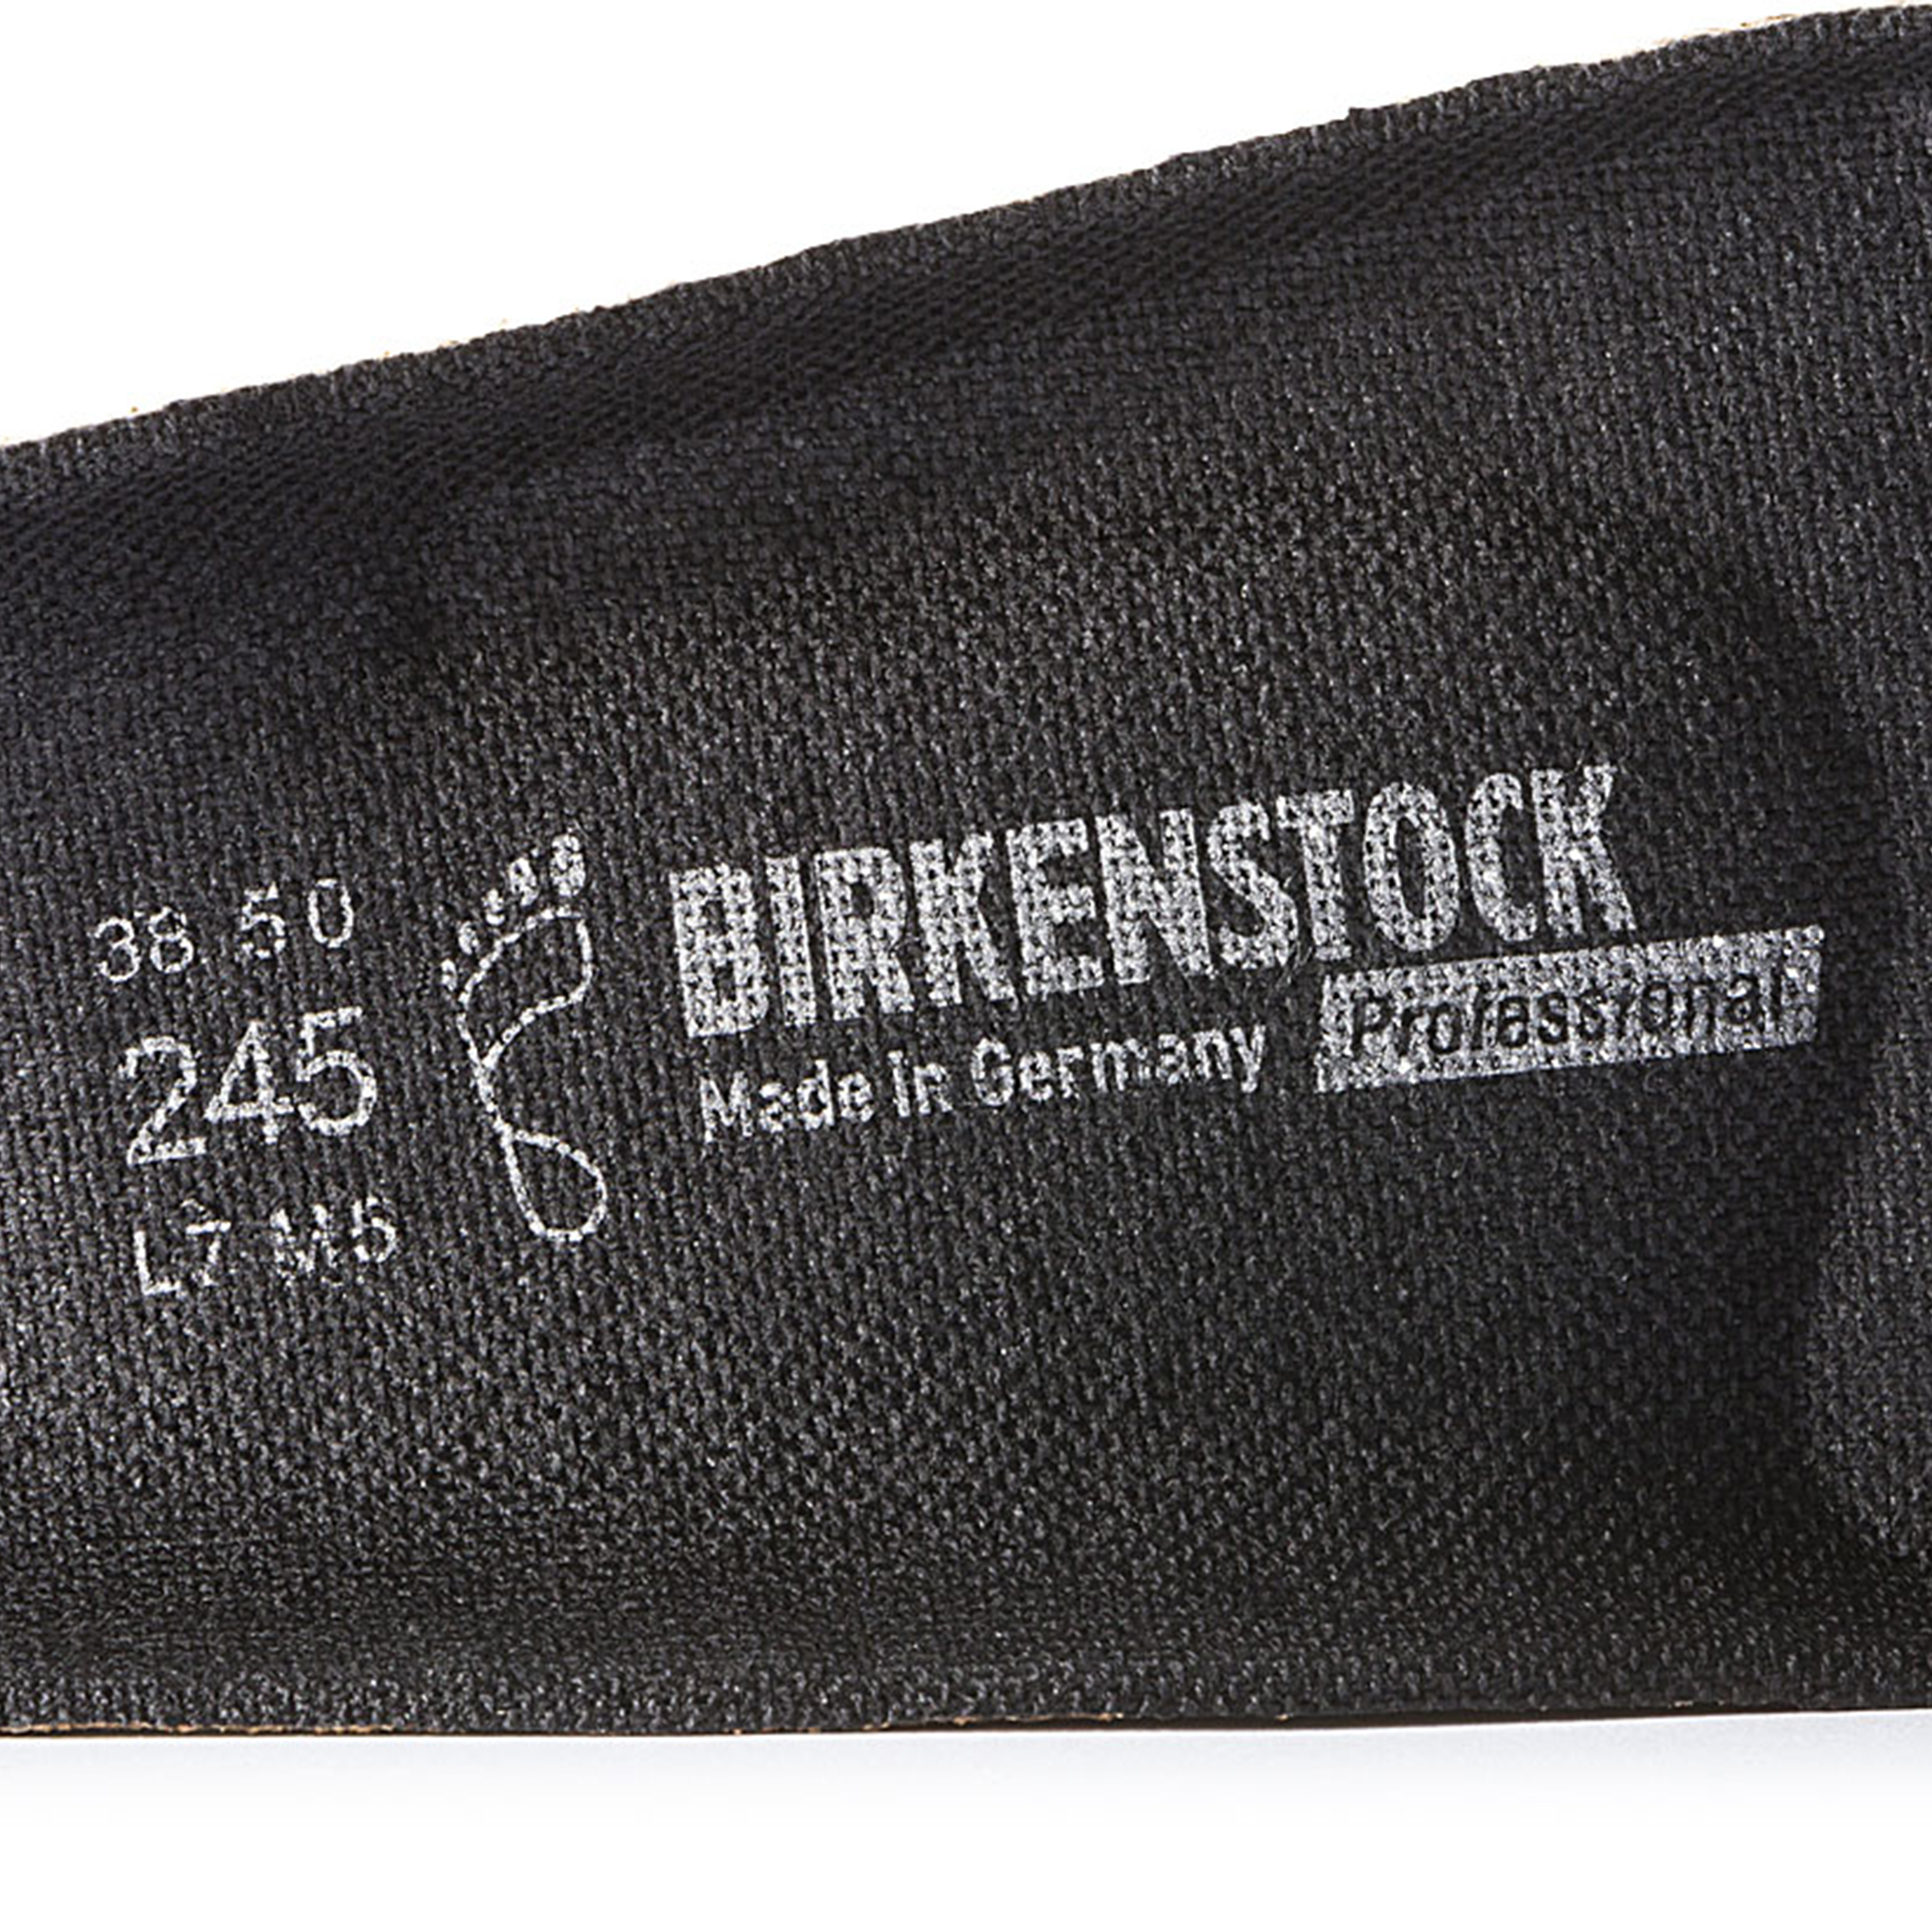 birkenstock super birki replacement insole